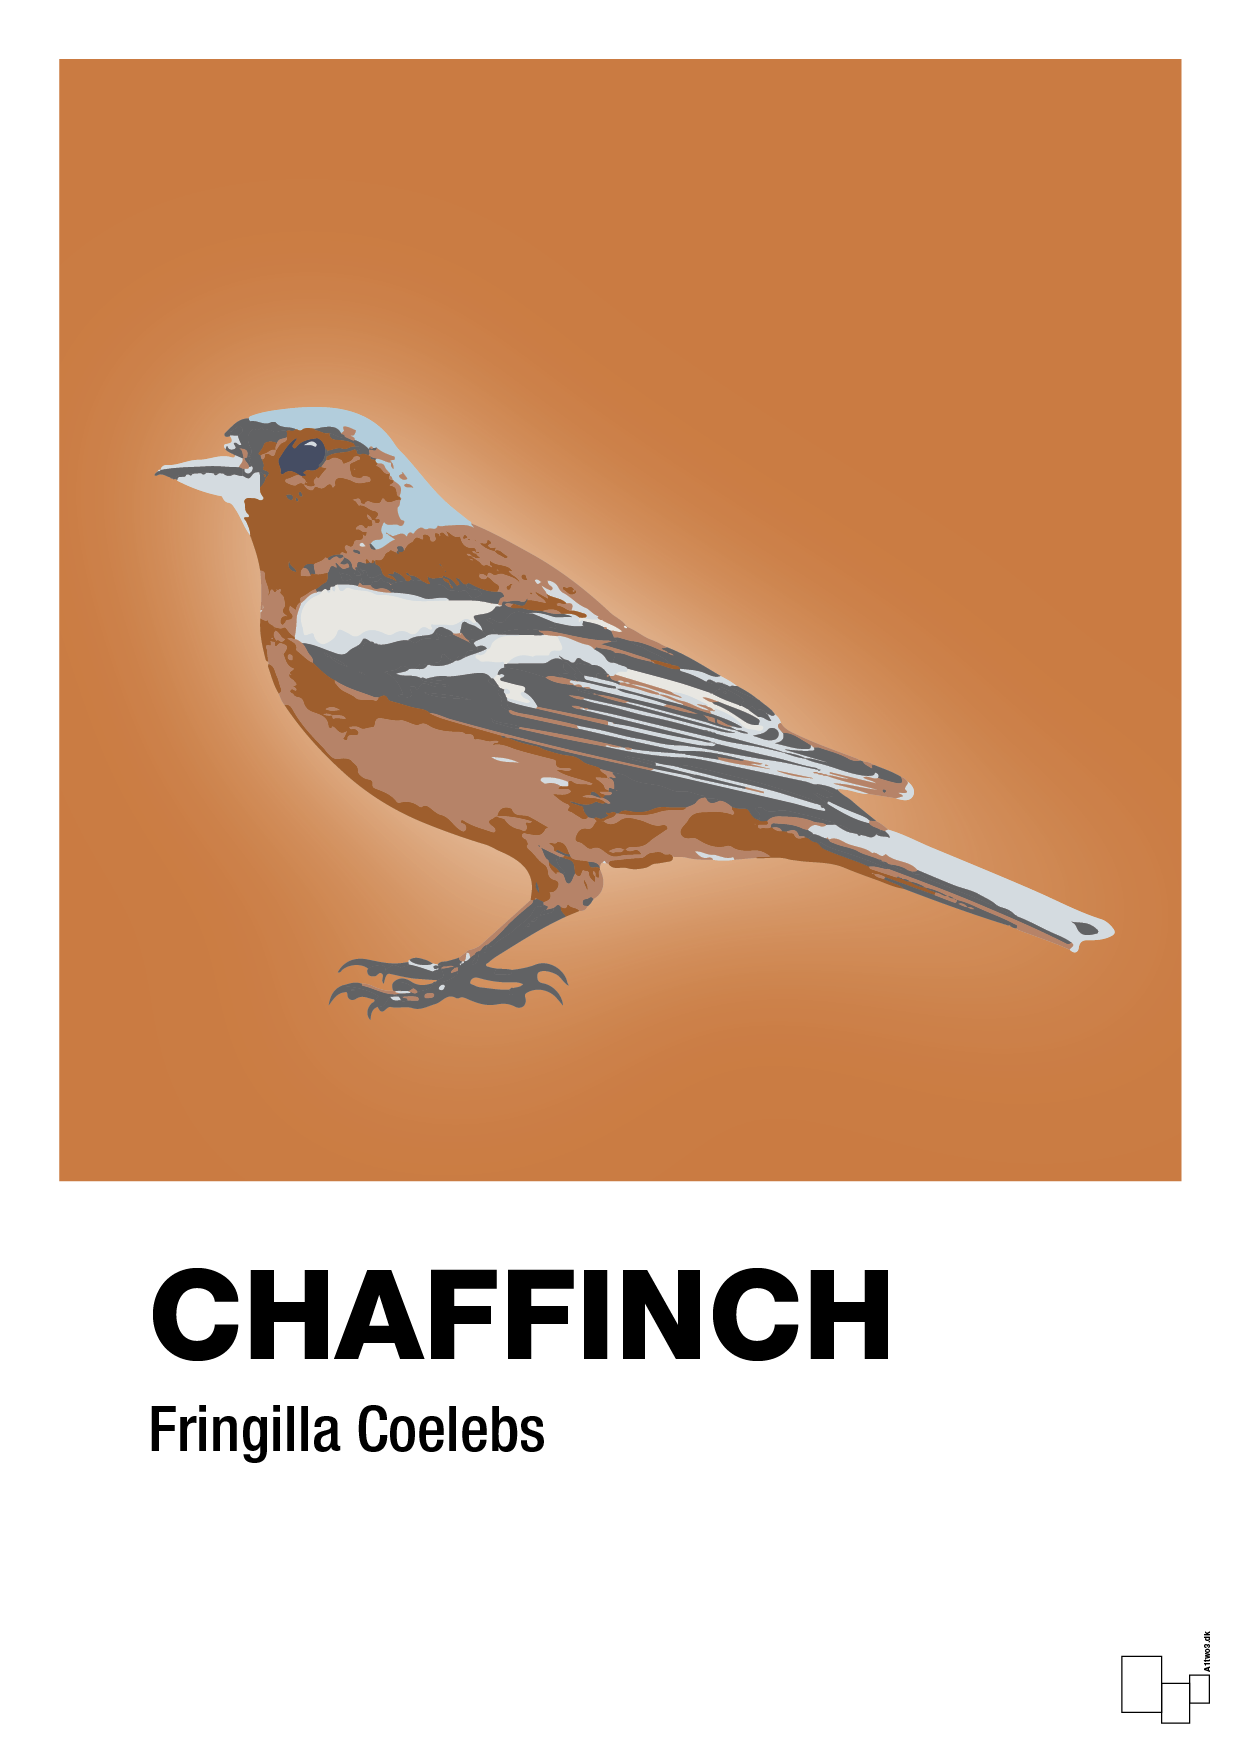 chaffinch - Plakat med Videnskab i Rumba Orange